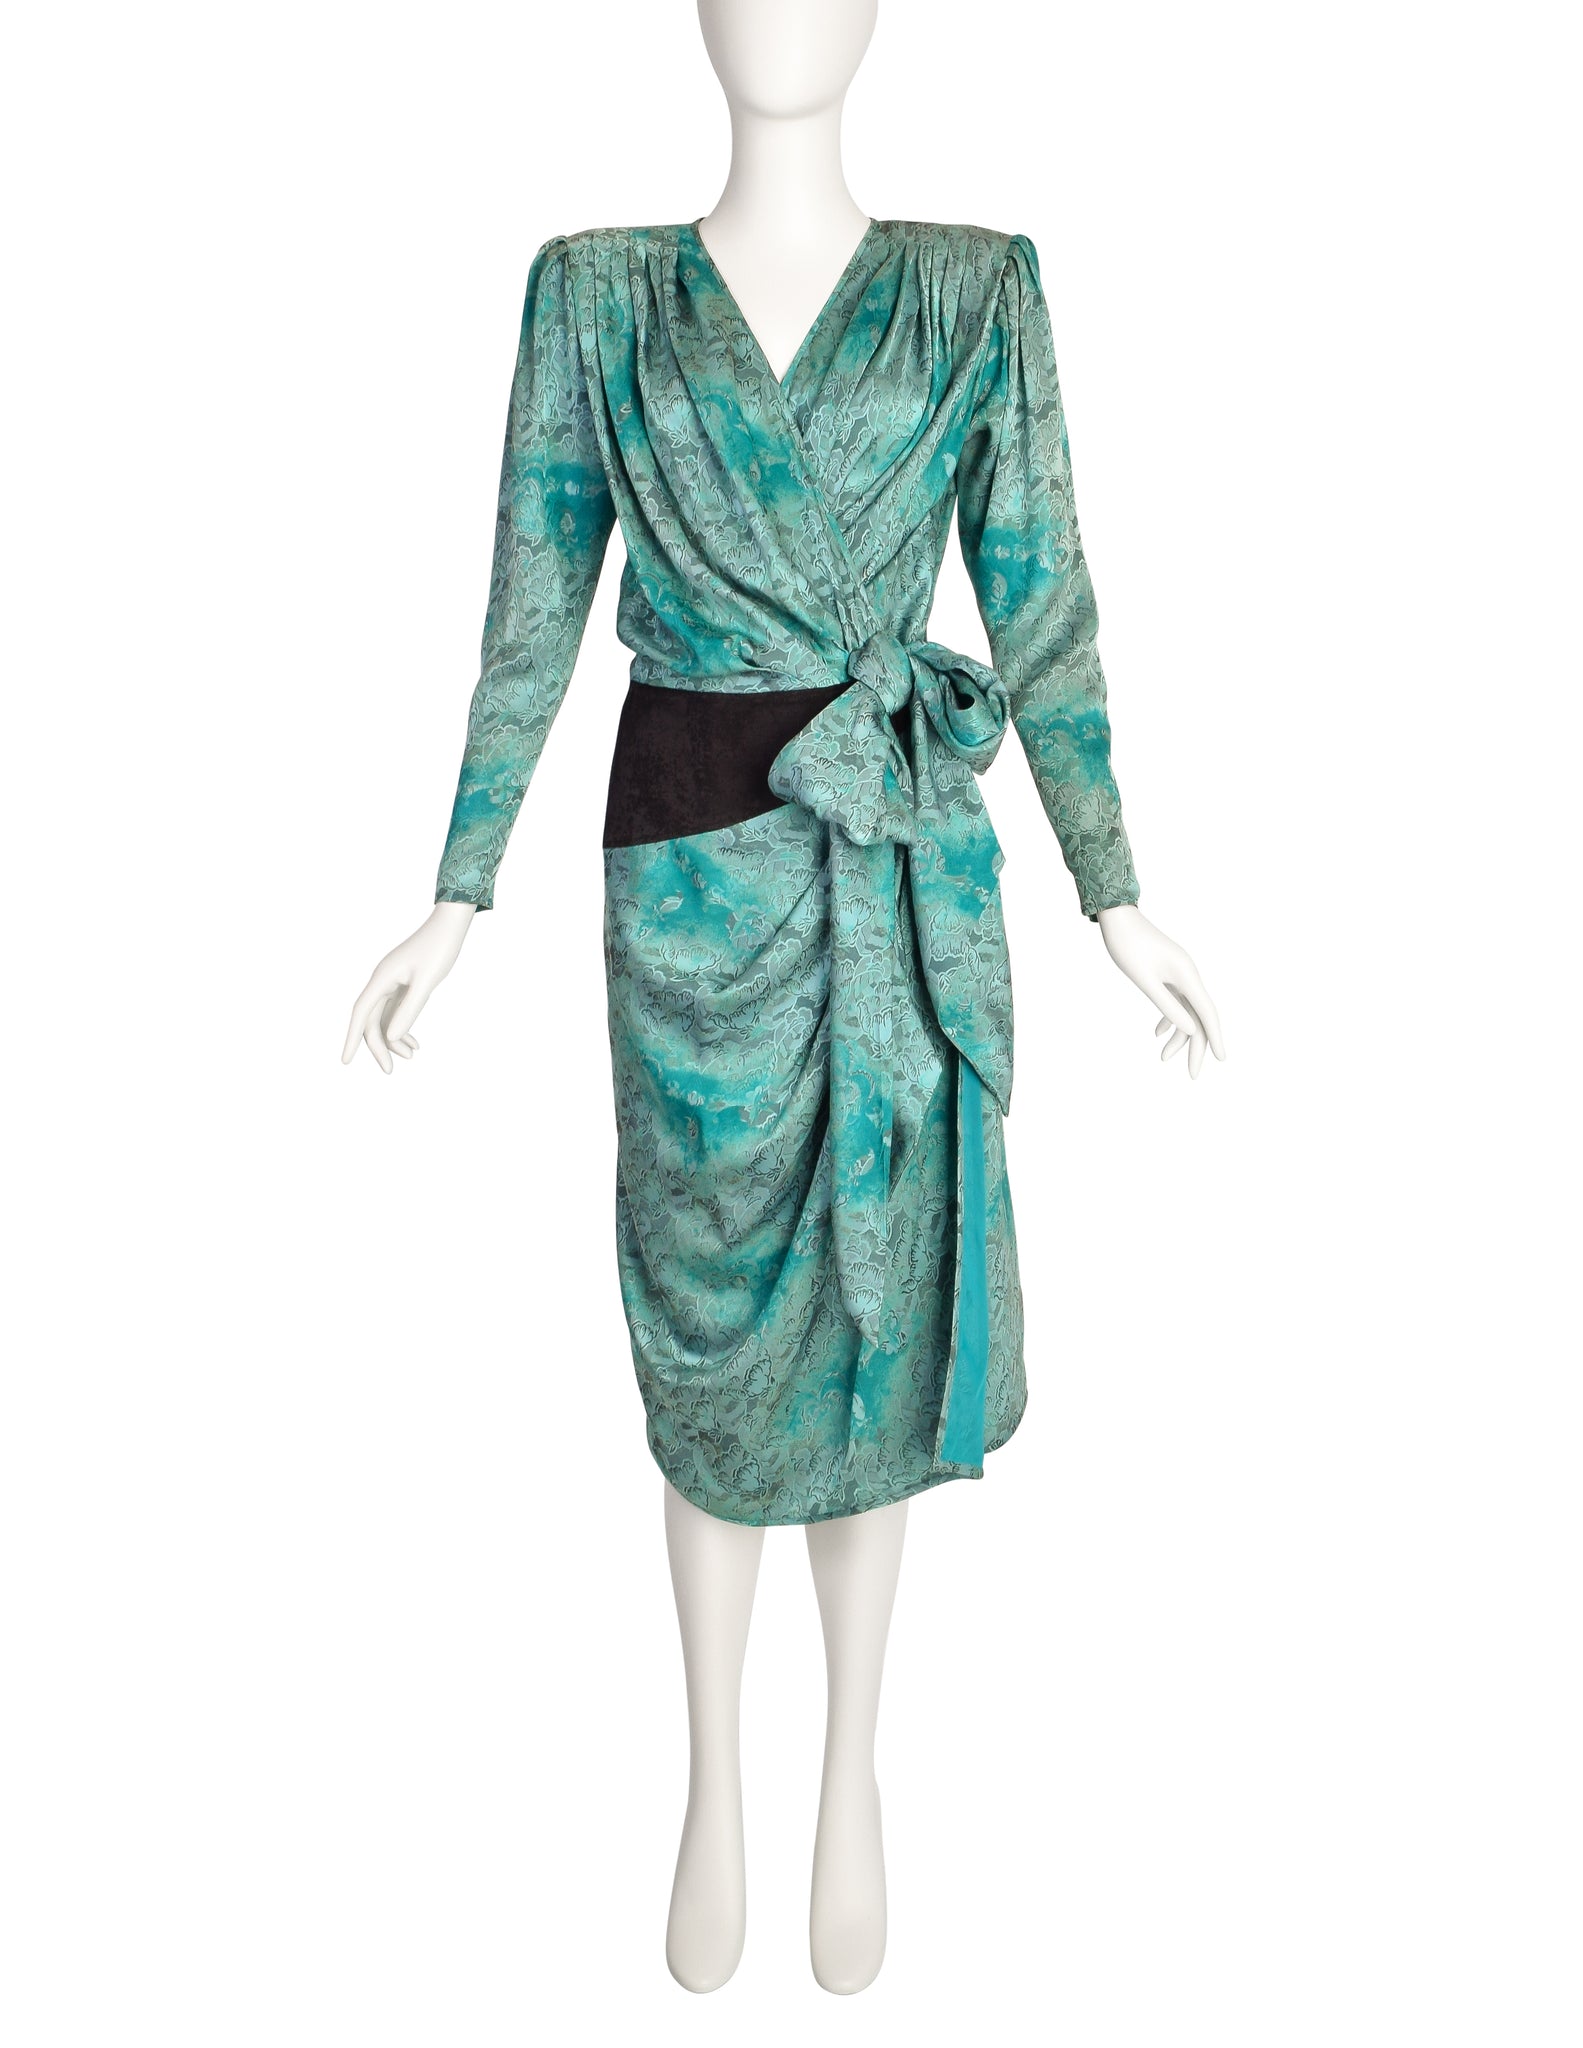 Emanuel Ungaro Vintage AW 1985 Mint Turquoise Black Floral Silk Jacquard Draped Wrap Dress